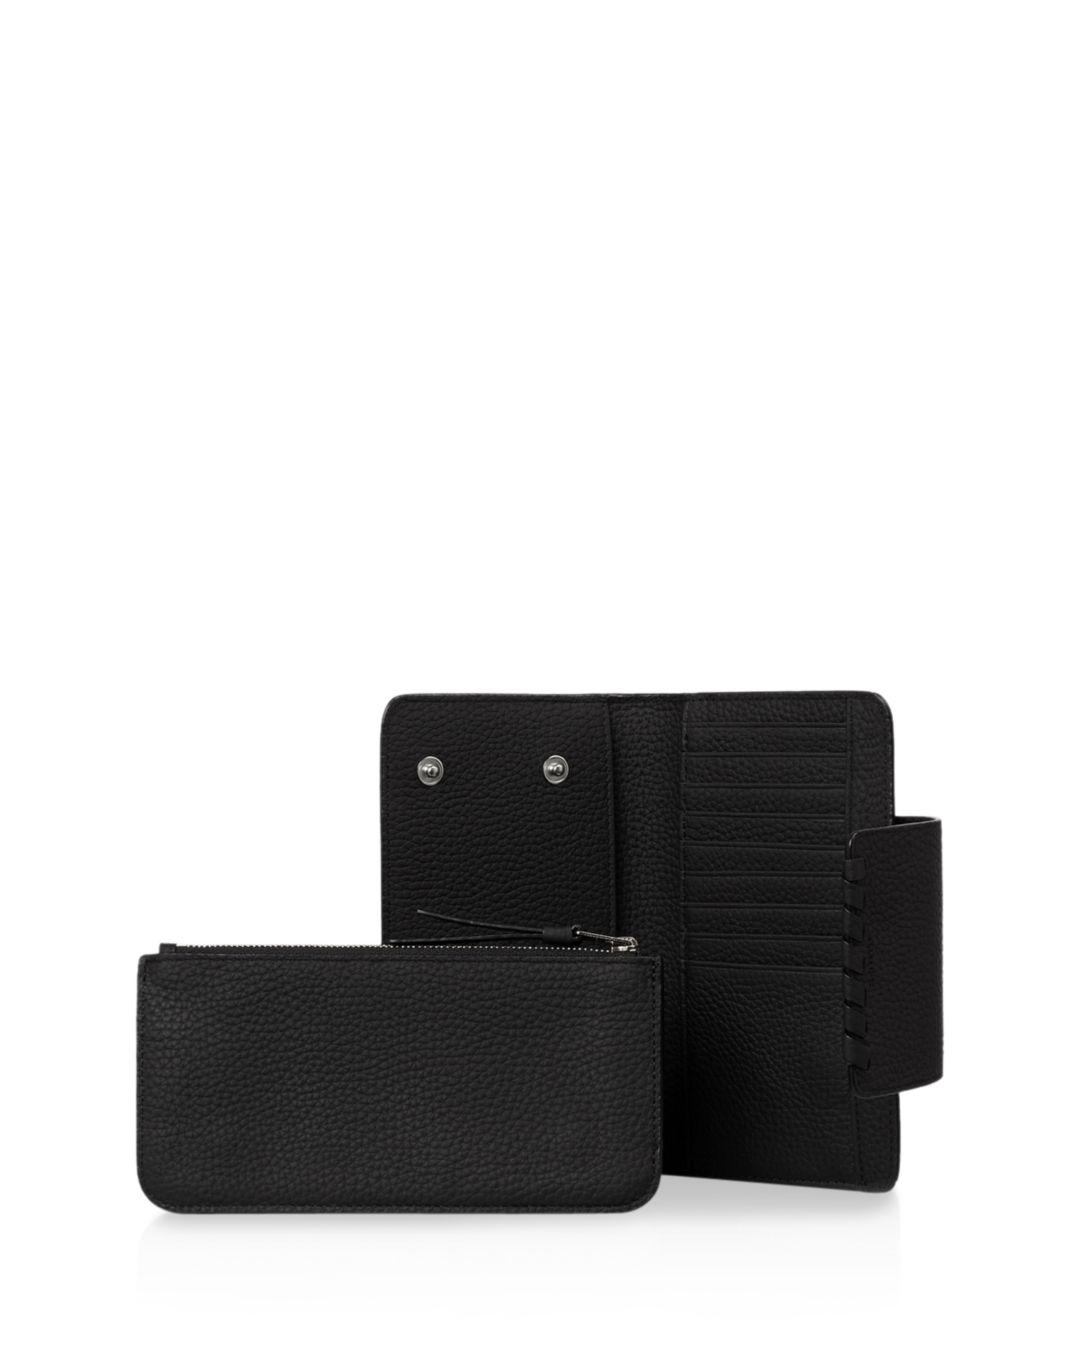 AllSaints Kita Japanese Leather Wallet in Black/Silver (Black) - Lyst